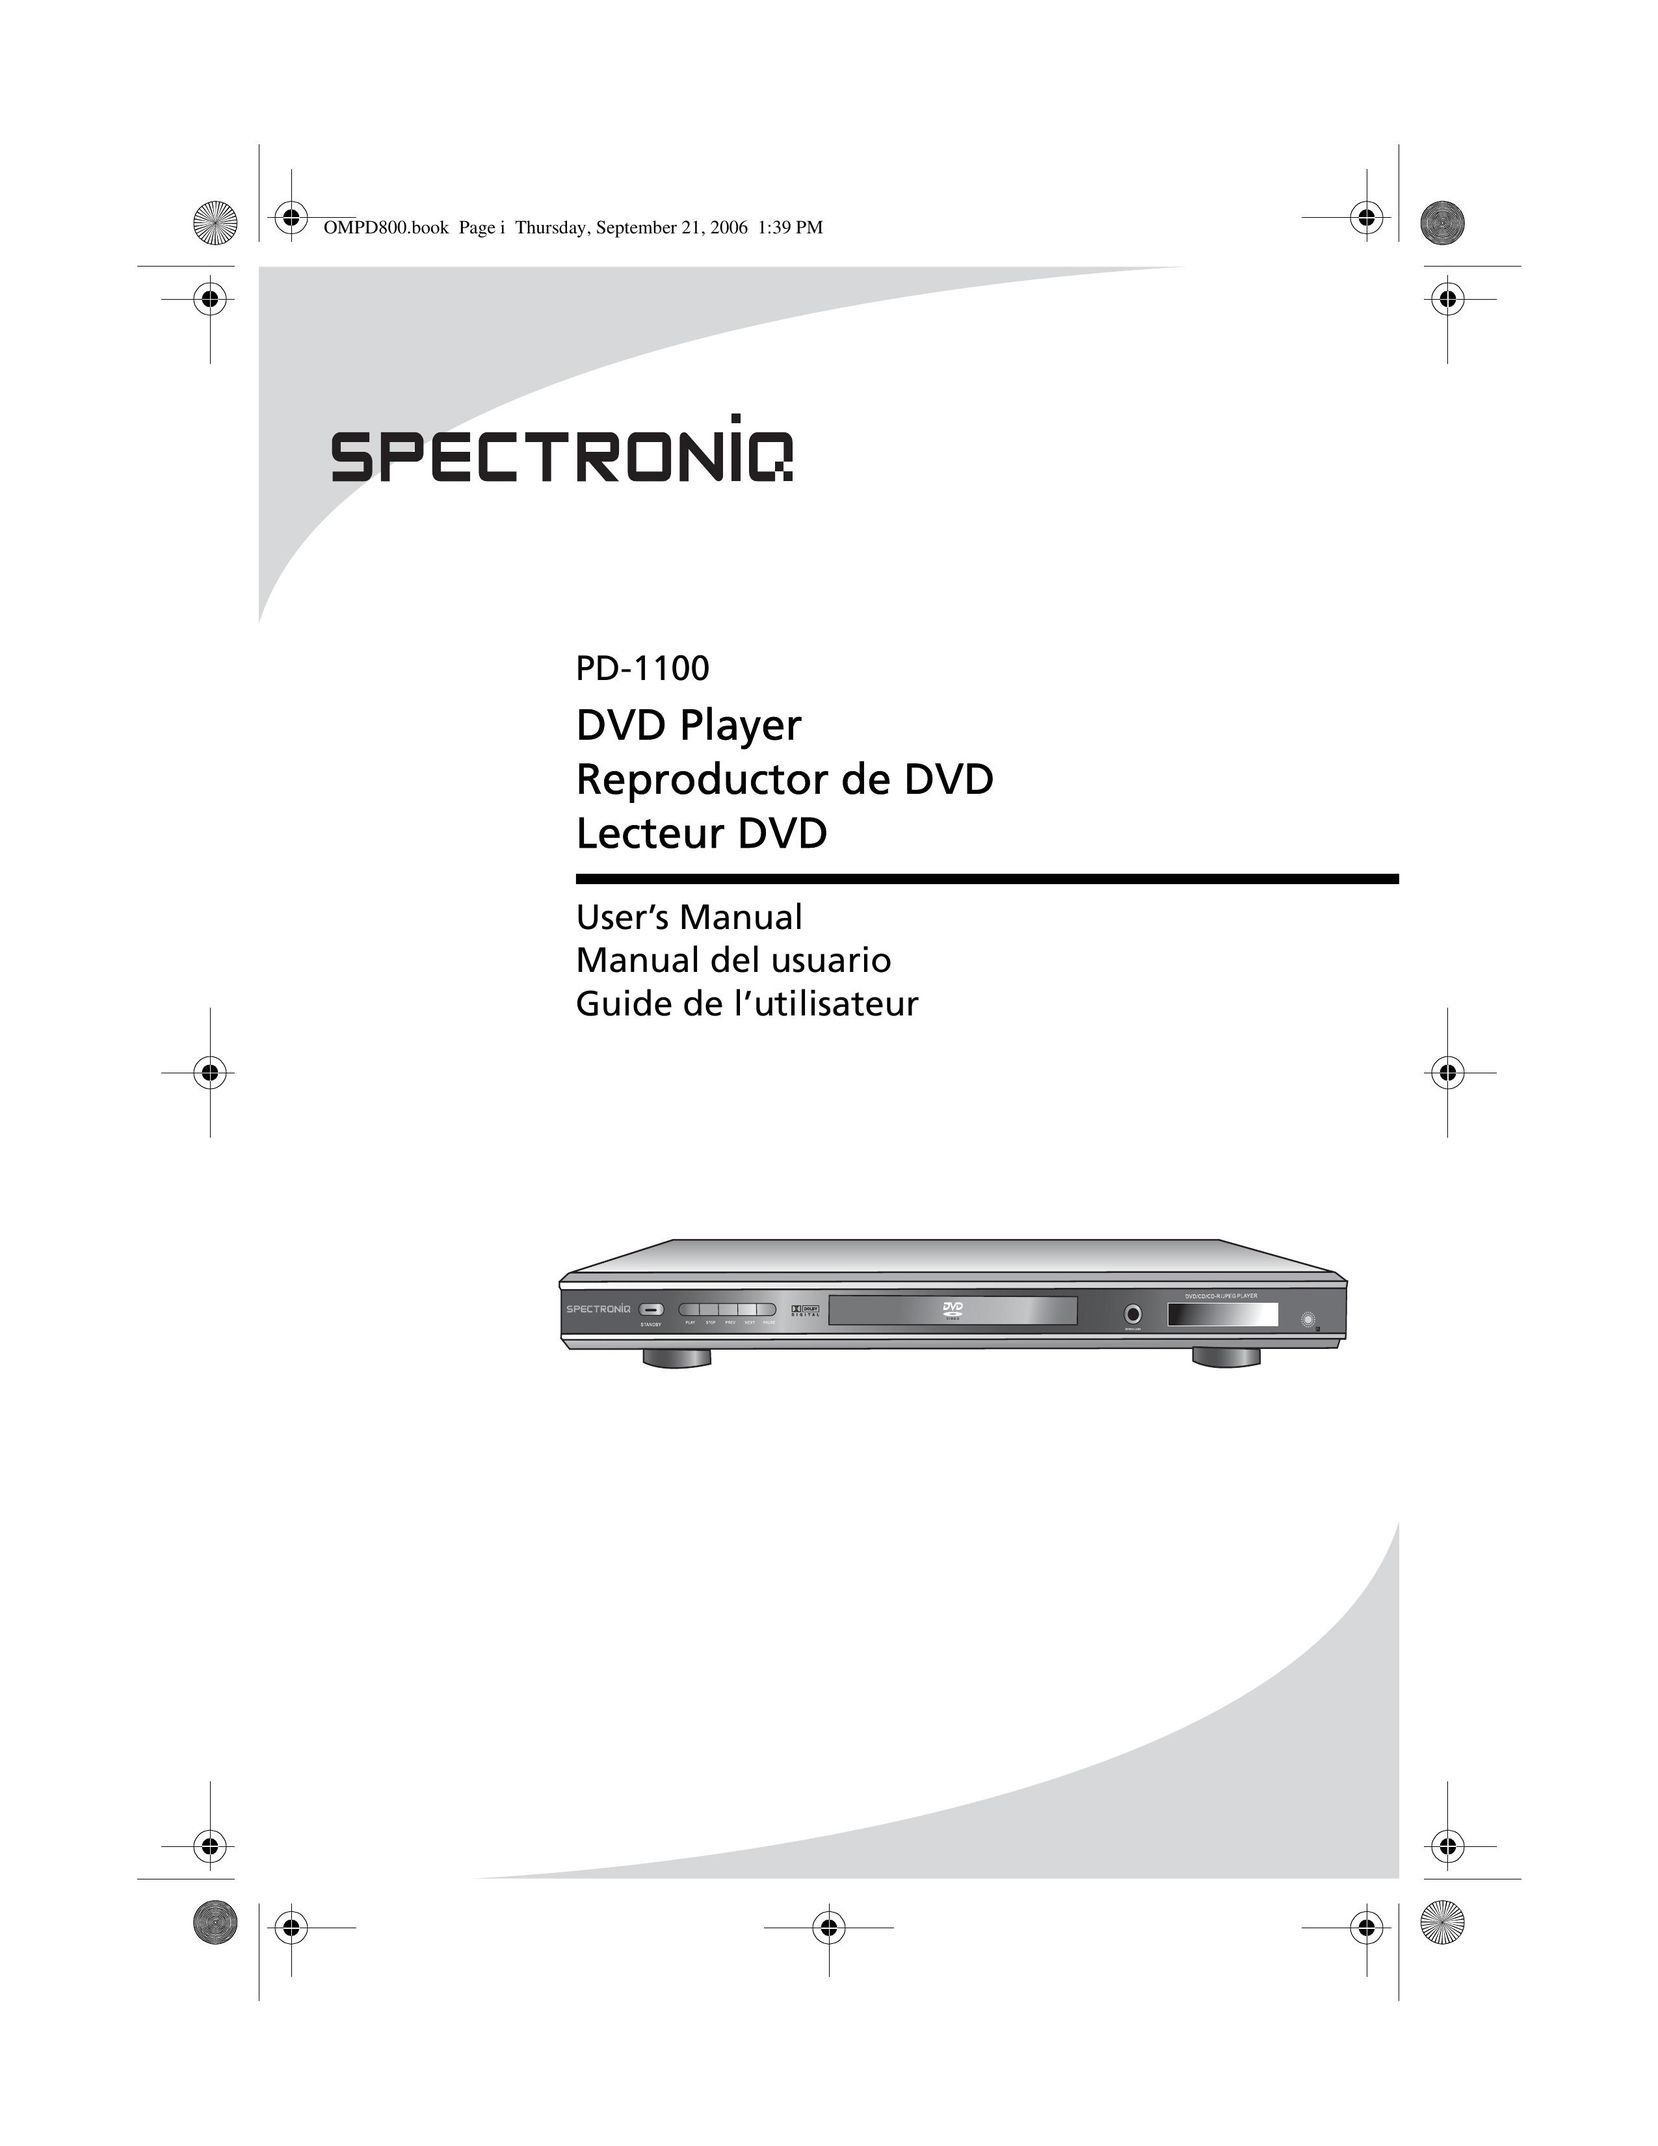 SpectronIQ PD-1100 DVD Player User Manual